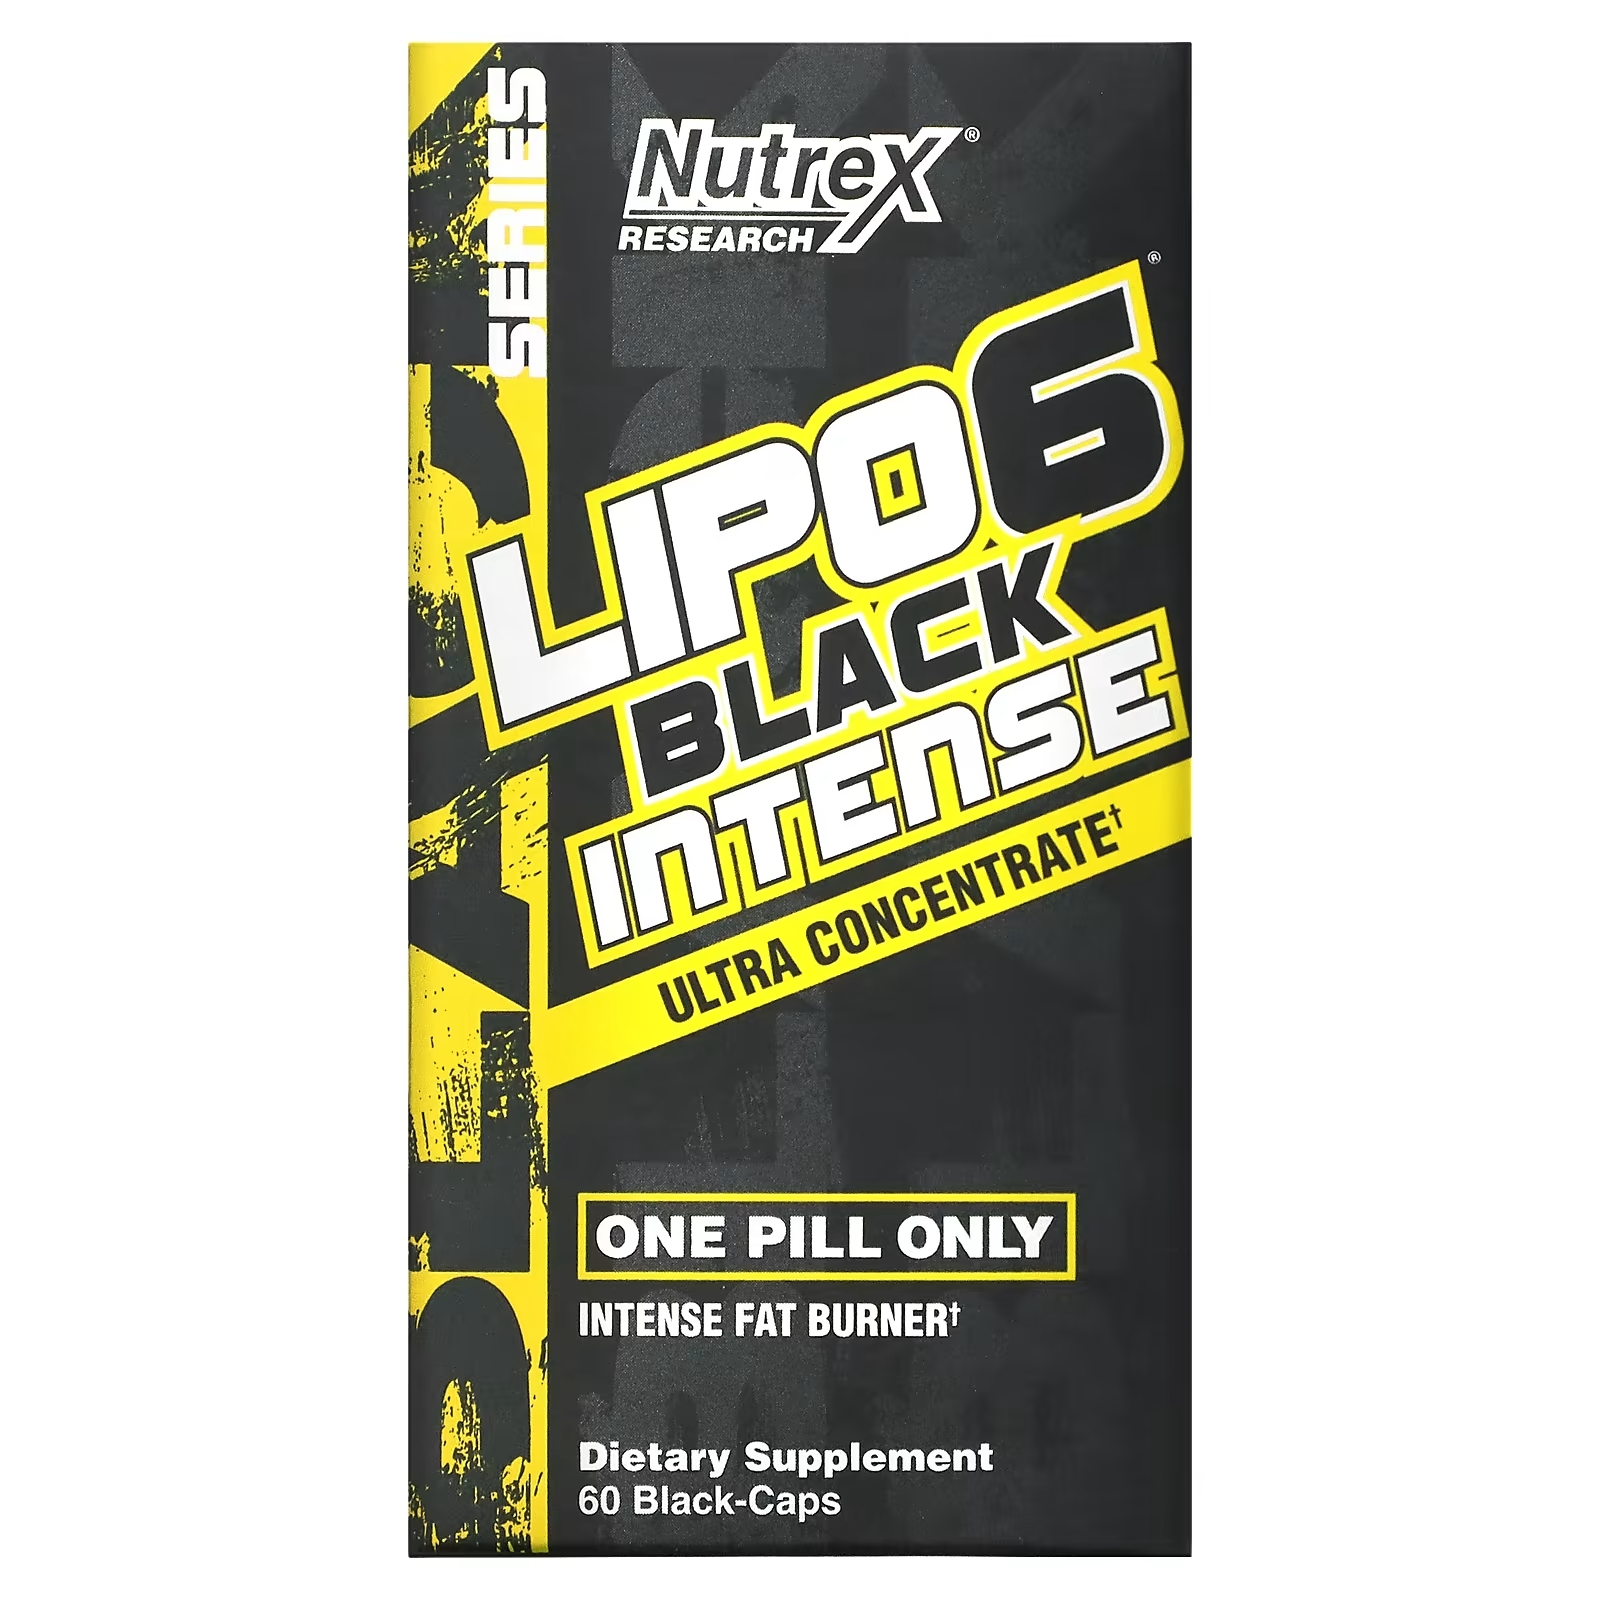 Ультраконцентрат Nutrex Research LIPO-6 Black Intense, 60 капсул